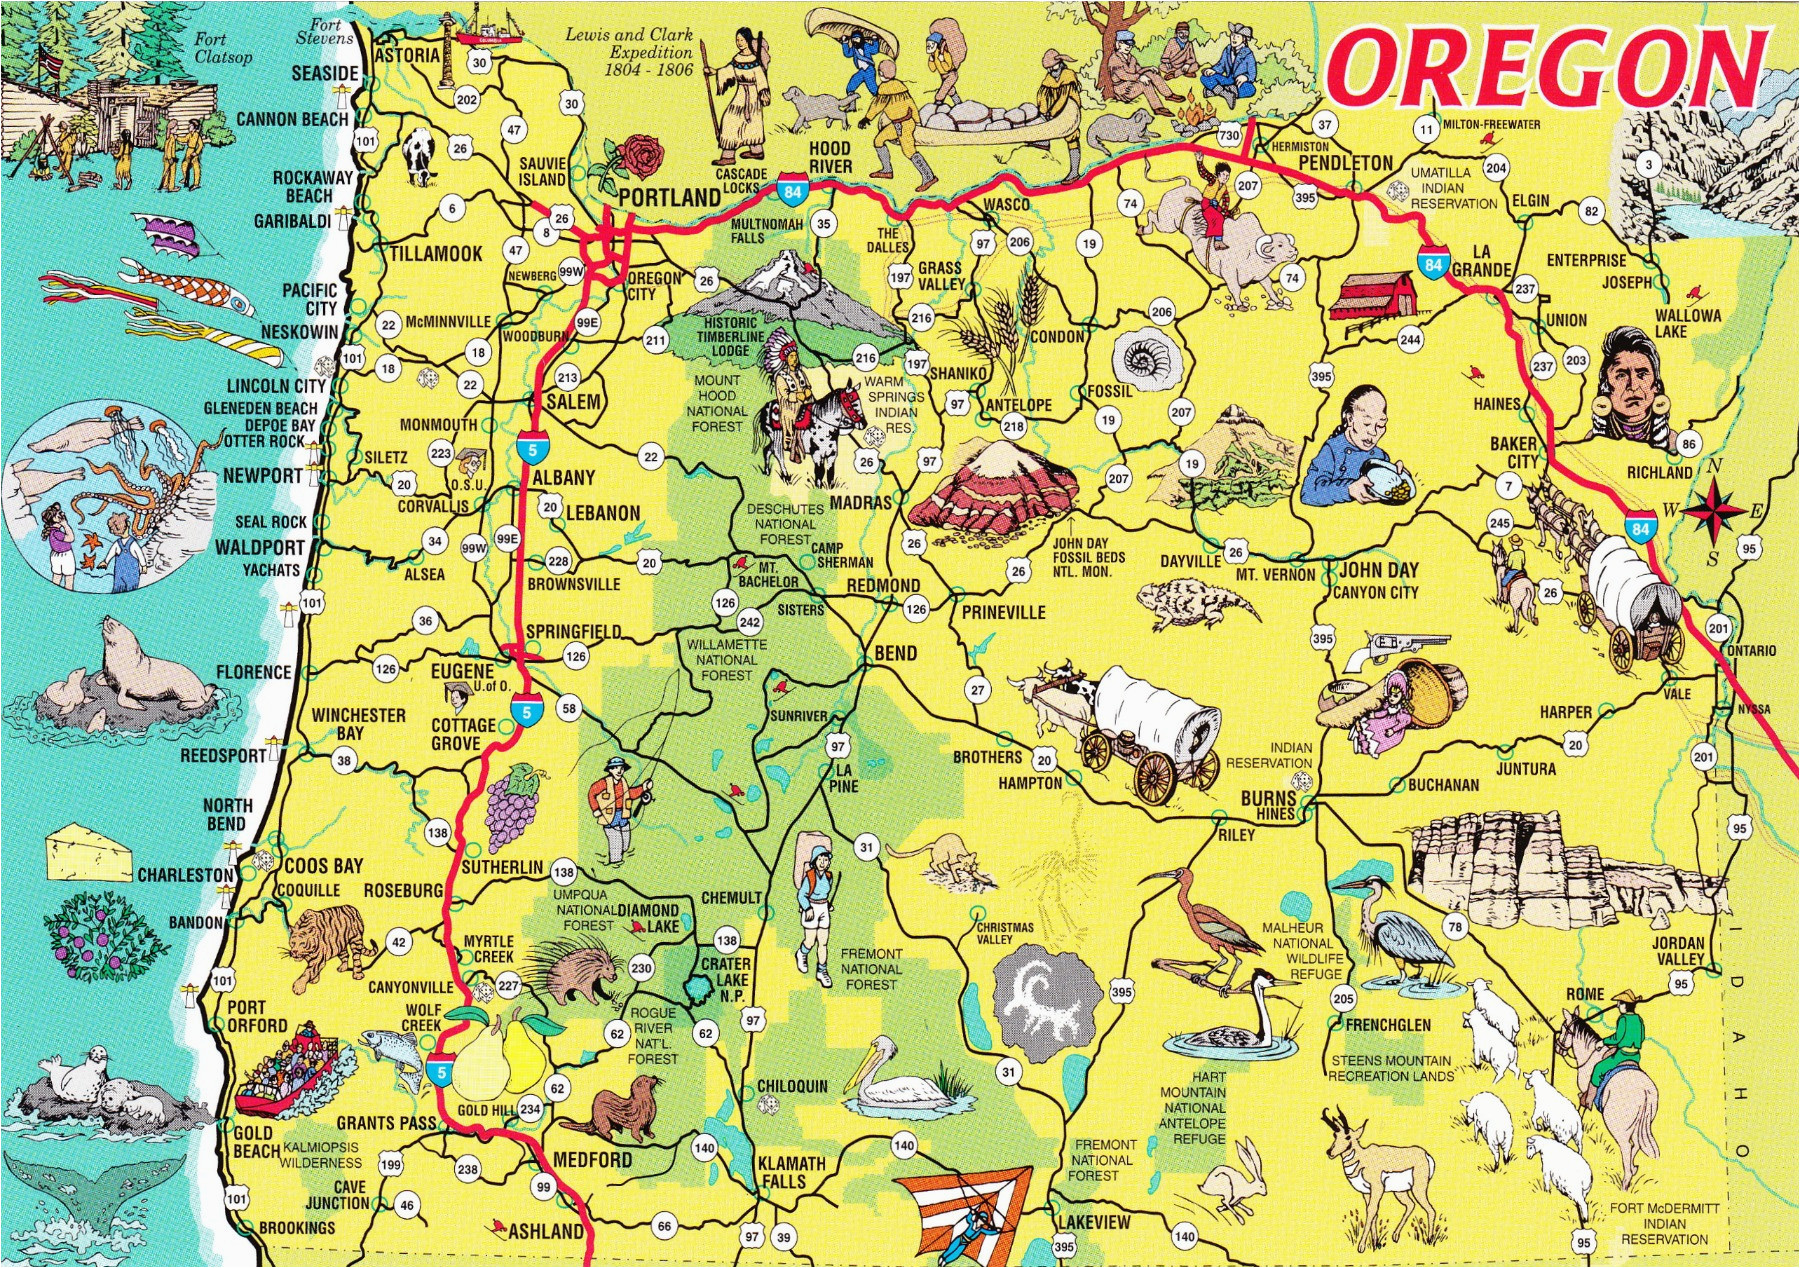 oregon travel and tourism 2019 map of washington state and oregon